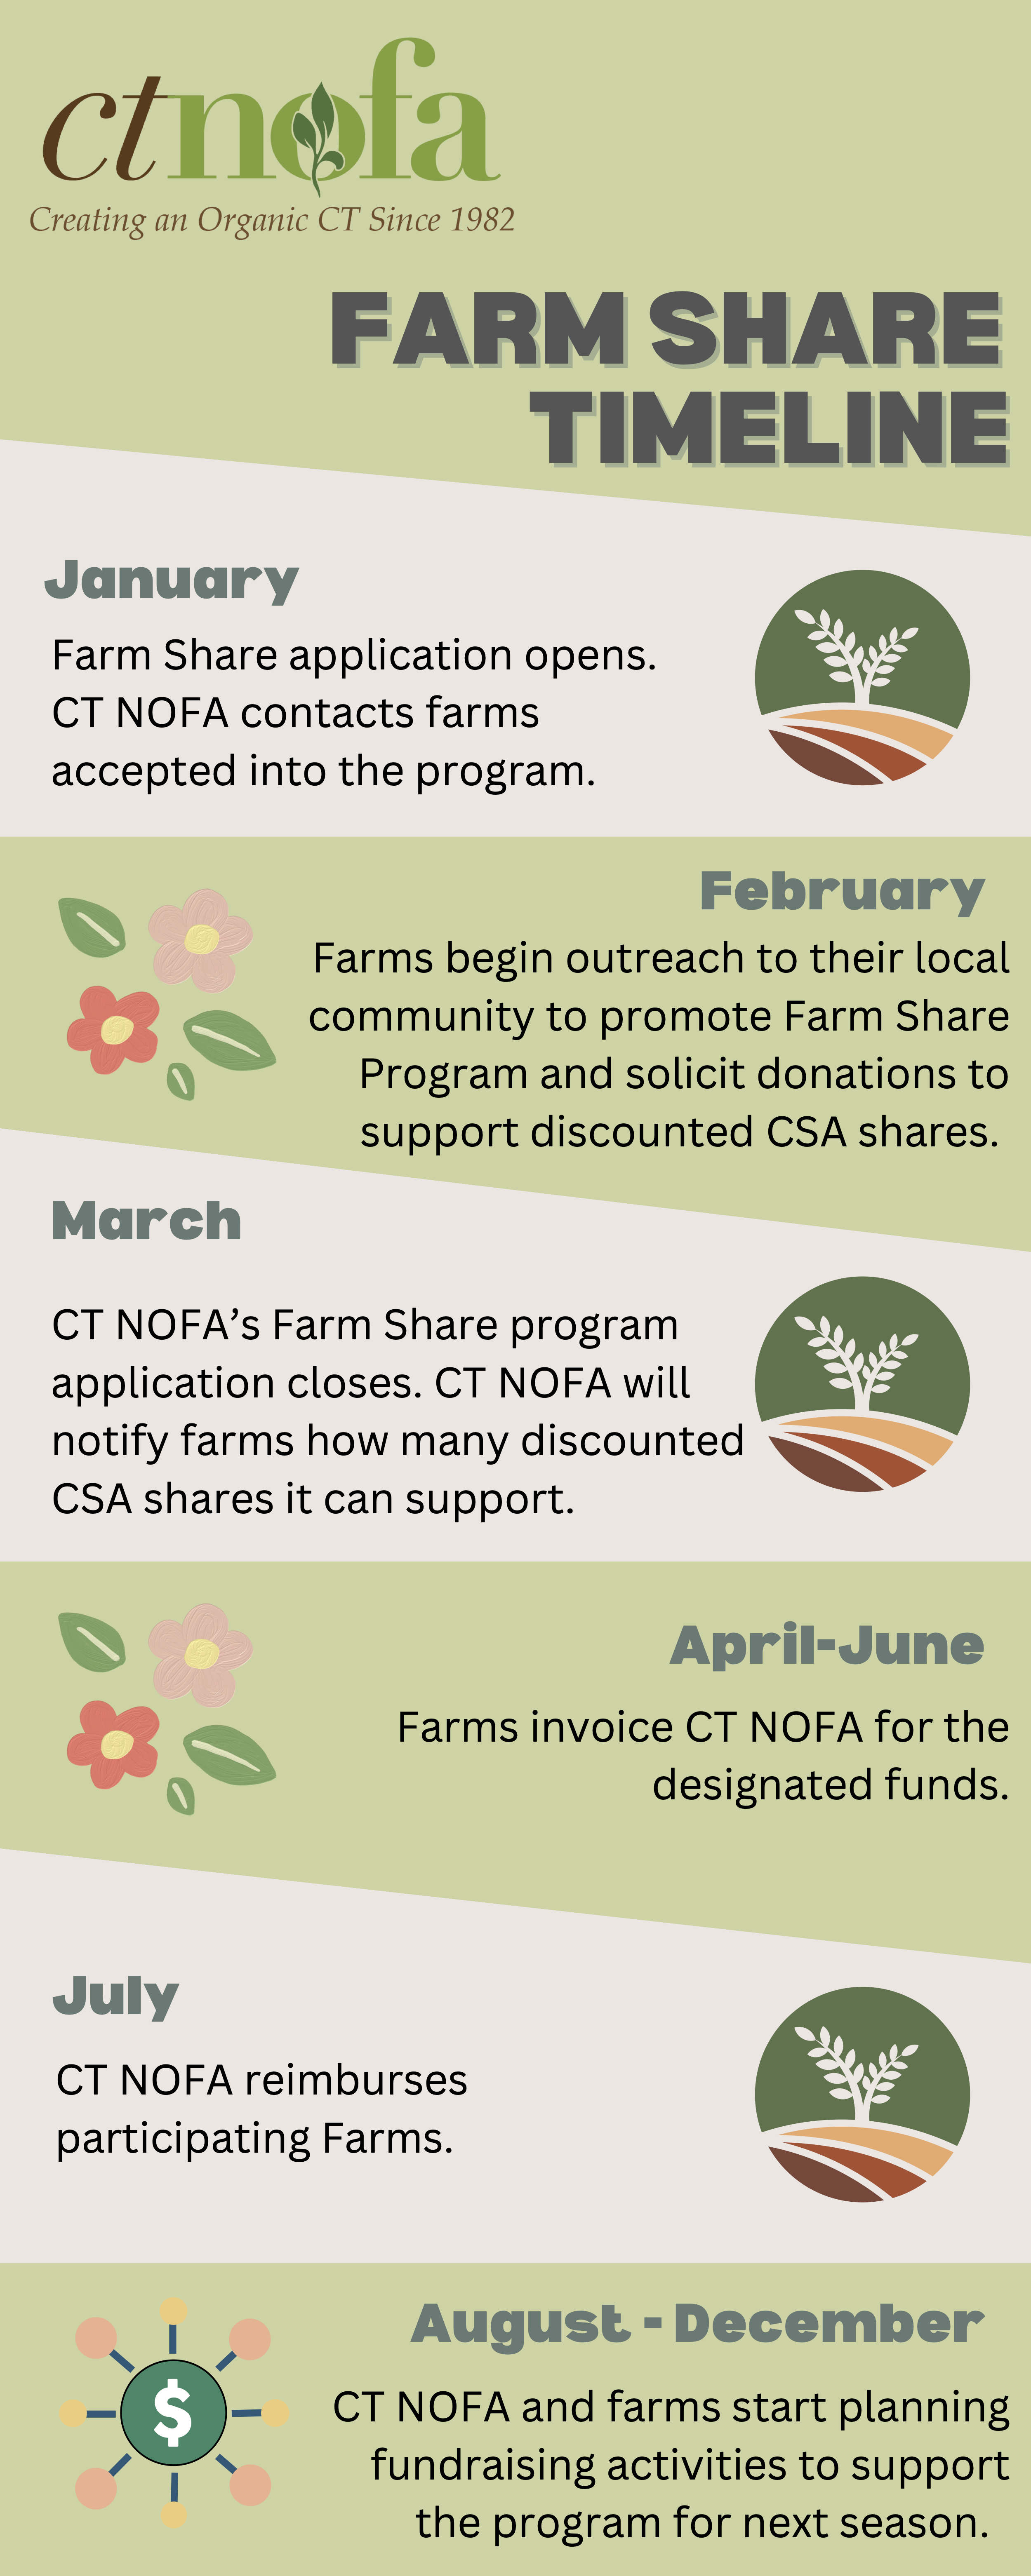 Farm Share Timeline Infographic